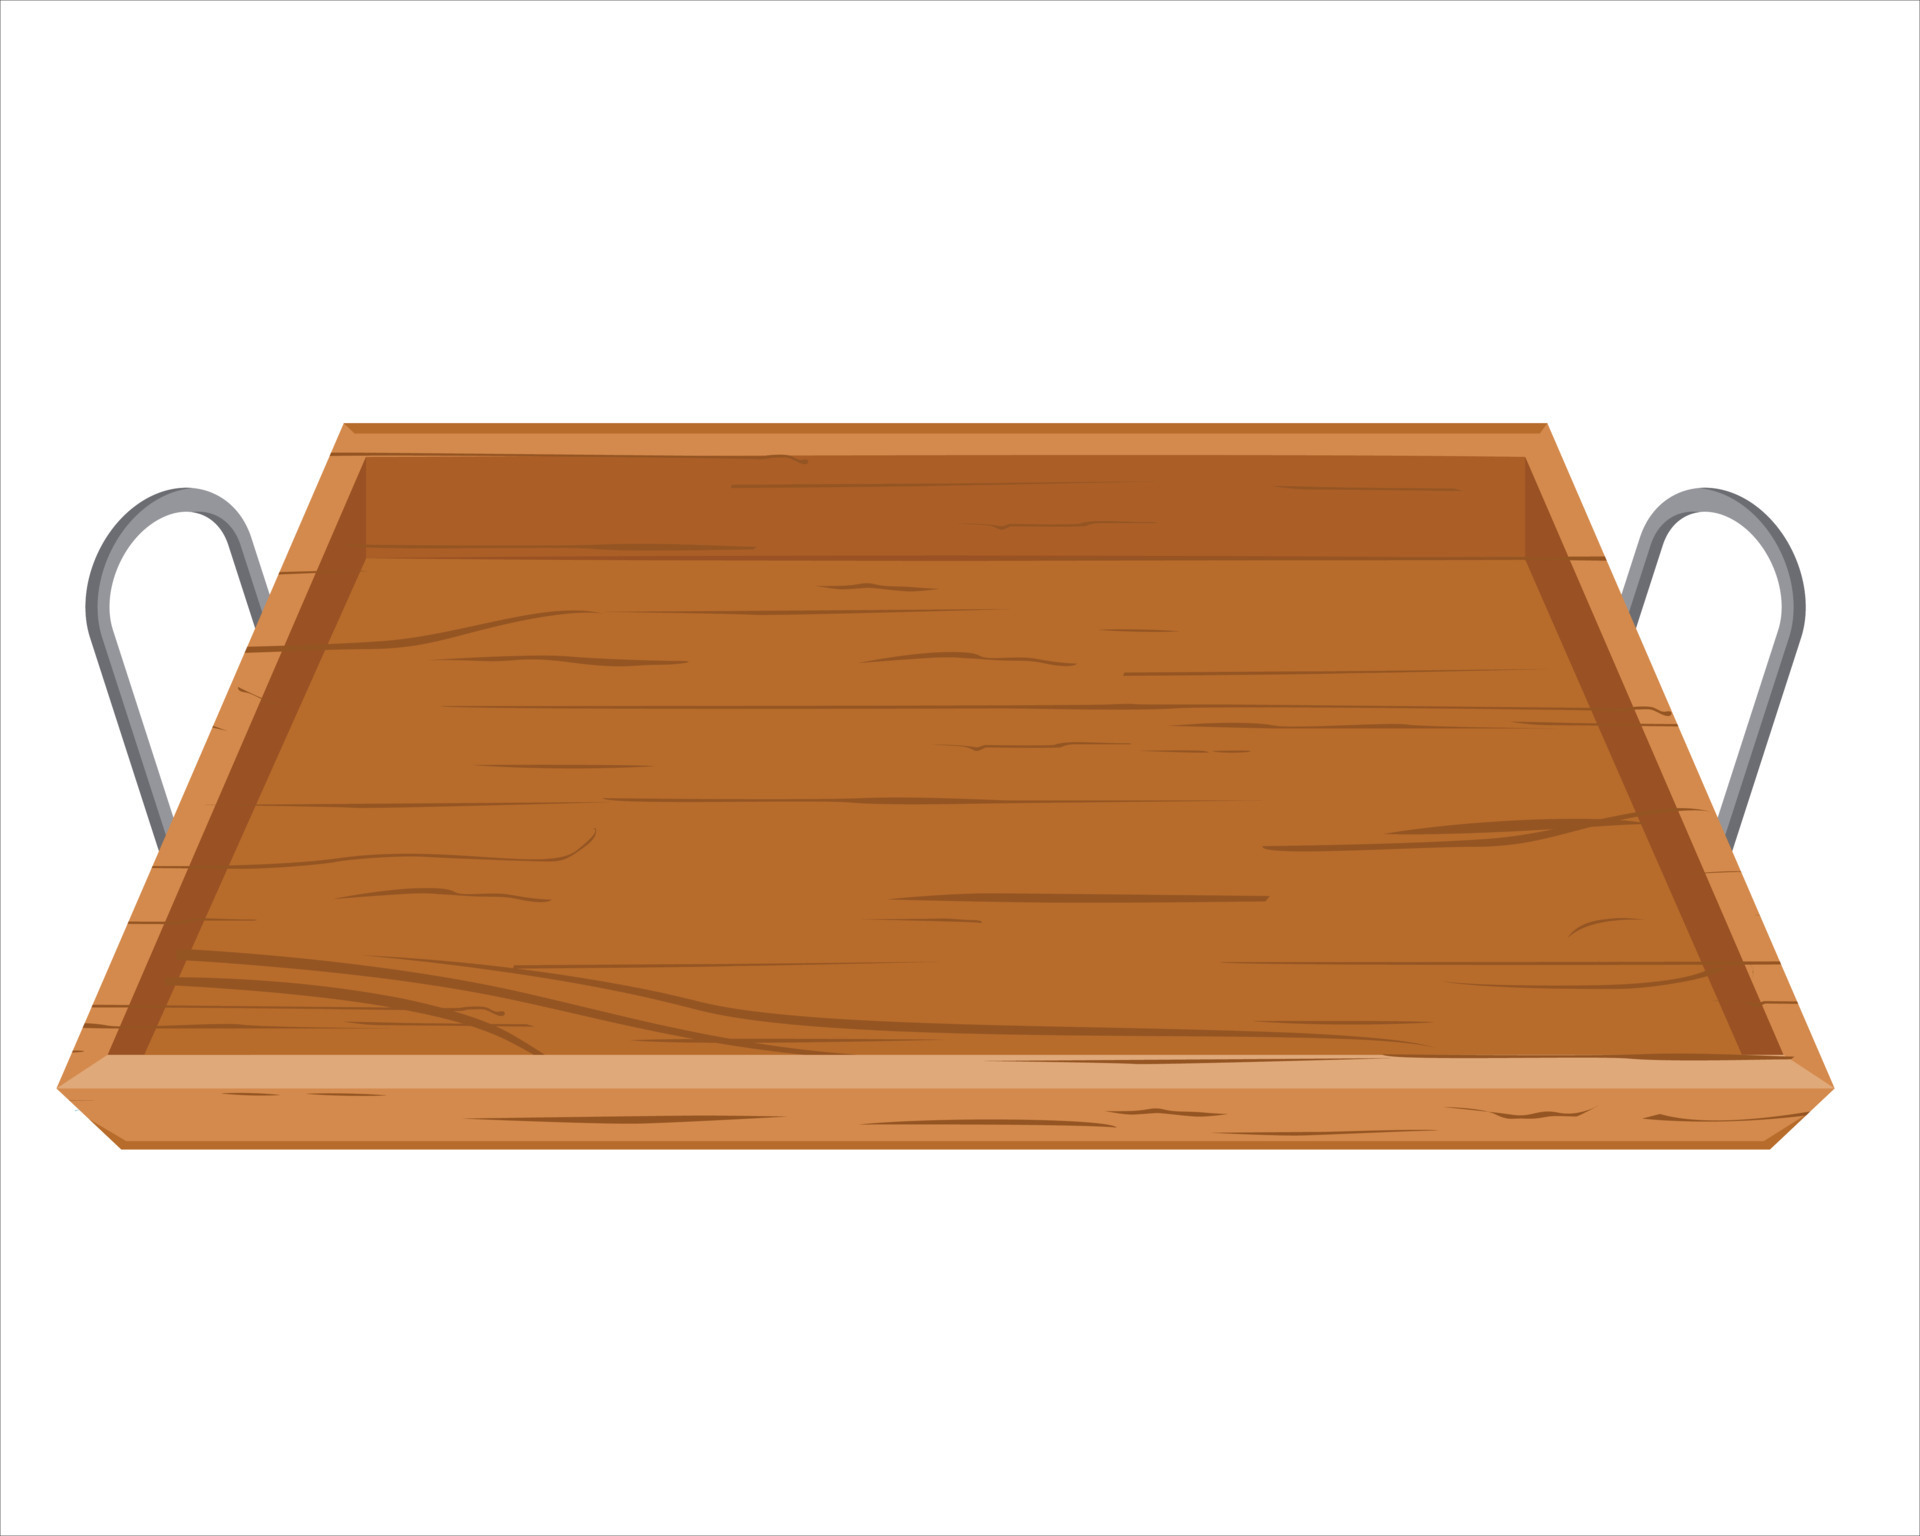 PrintEmpty meal trays Cartoon food dish tray, wooden square